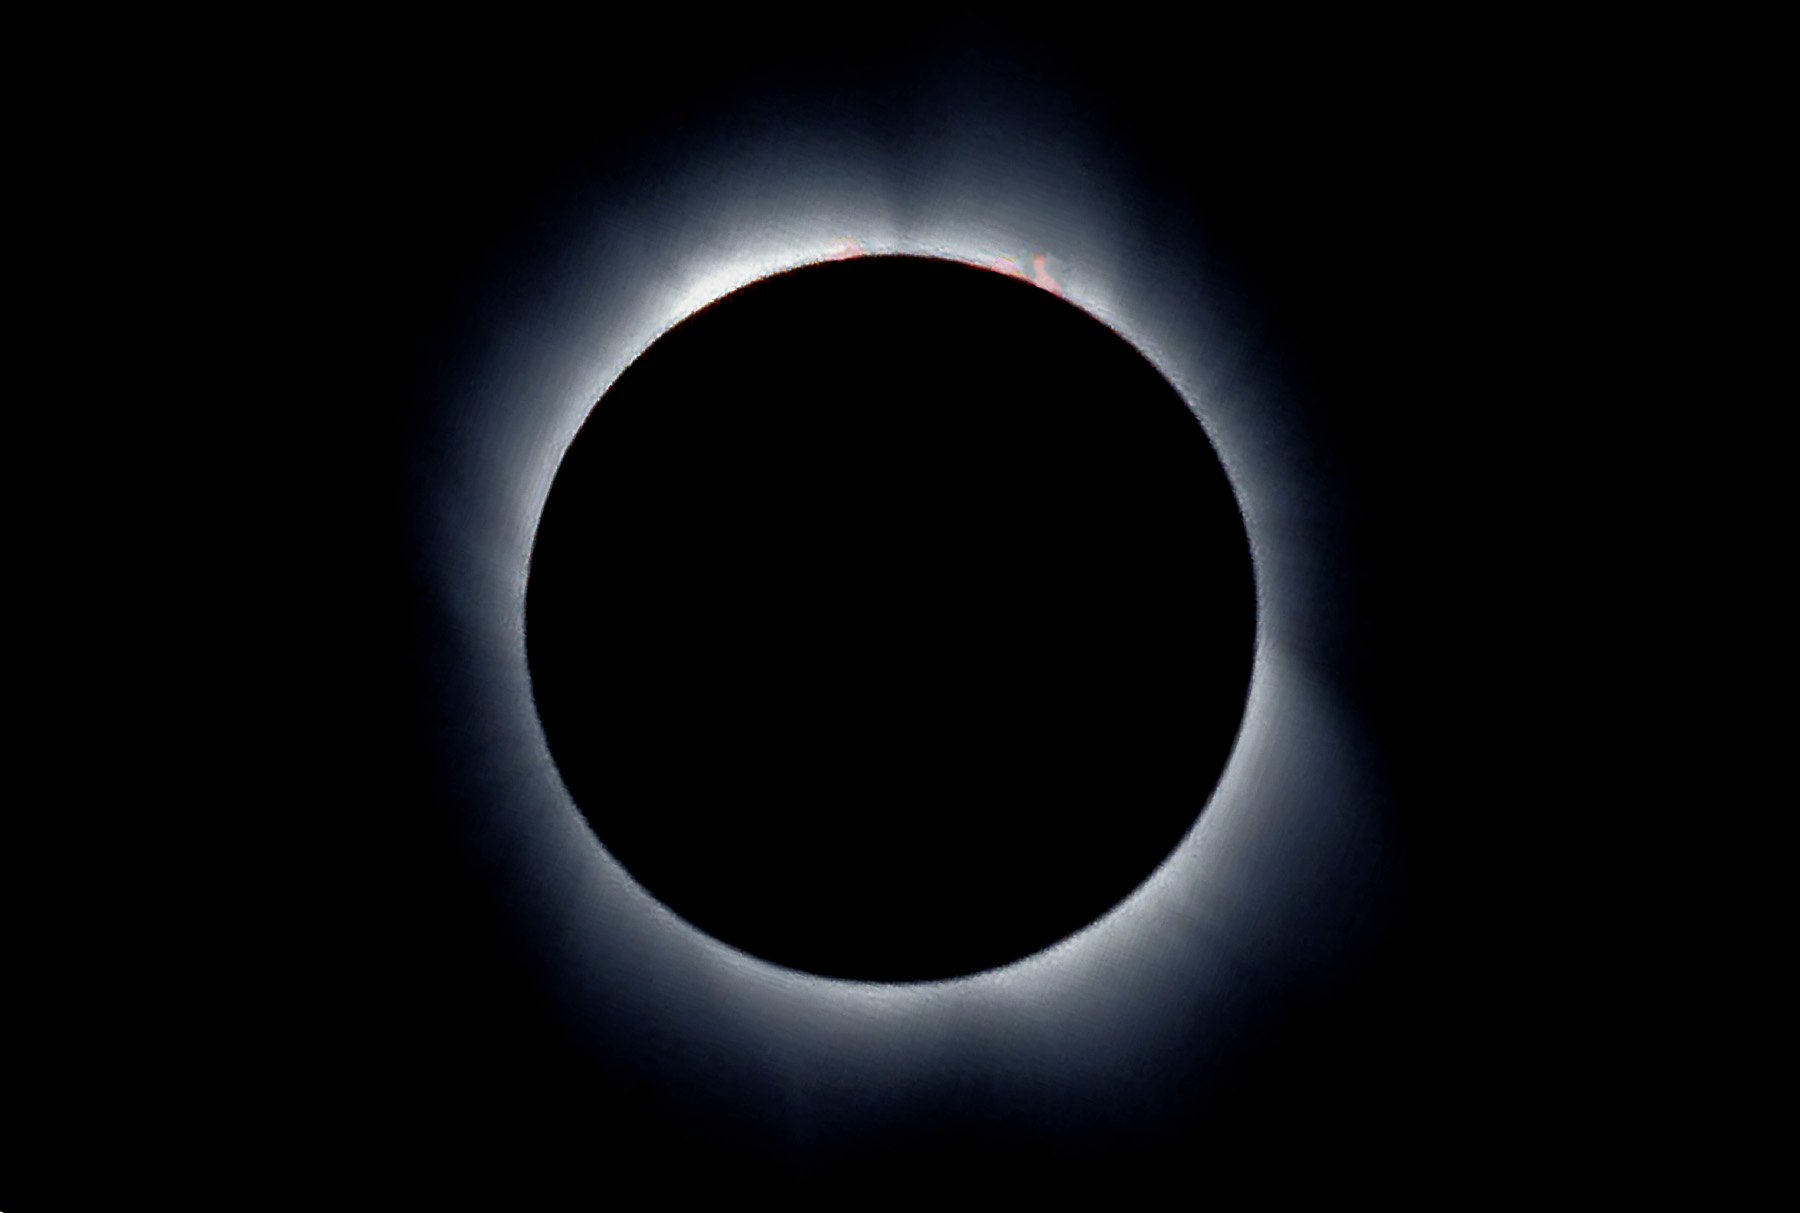 Eclipse 2006 - A76 - Eclipse - Mid Corona